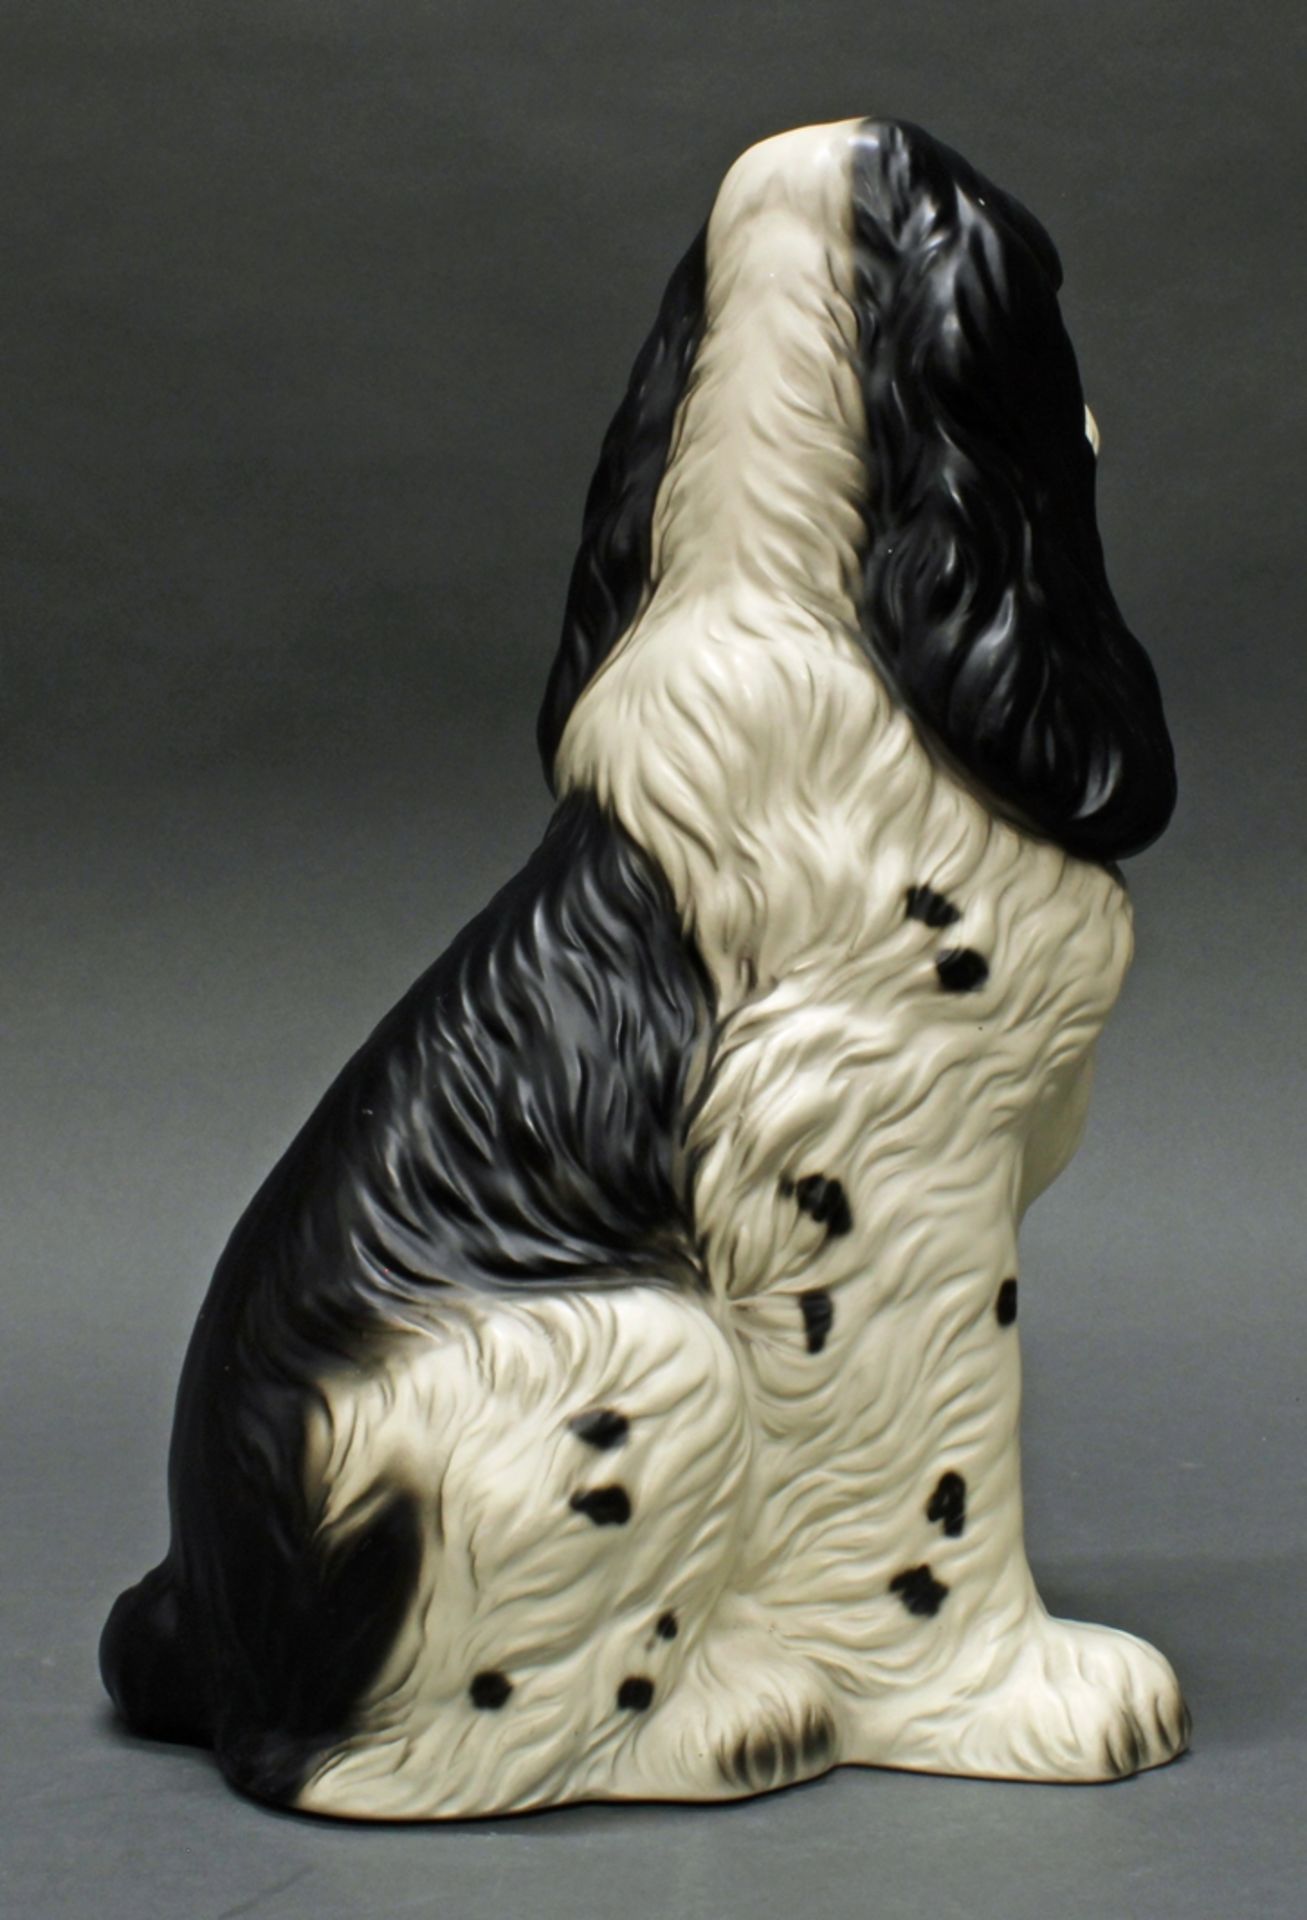 Porzellanfigur, "Cocker Spaniel", Royal, 20. Jh., Biskuitporzellan, schwarz-weiß-braun staffiert, s - Image 3 of 3